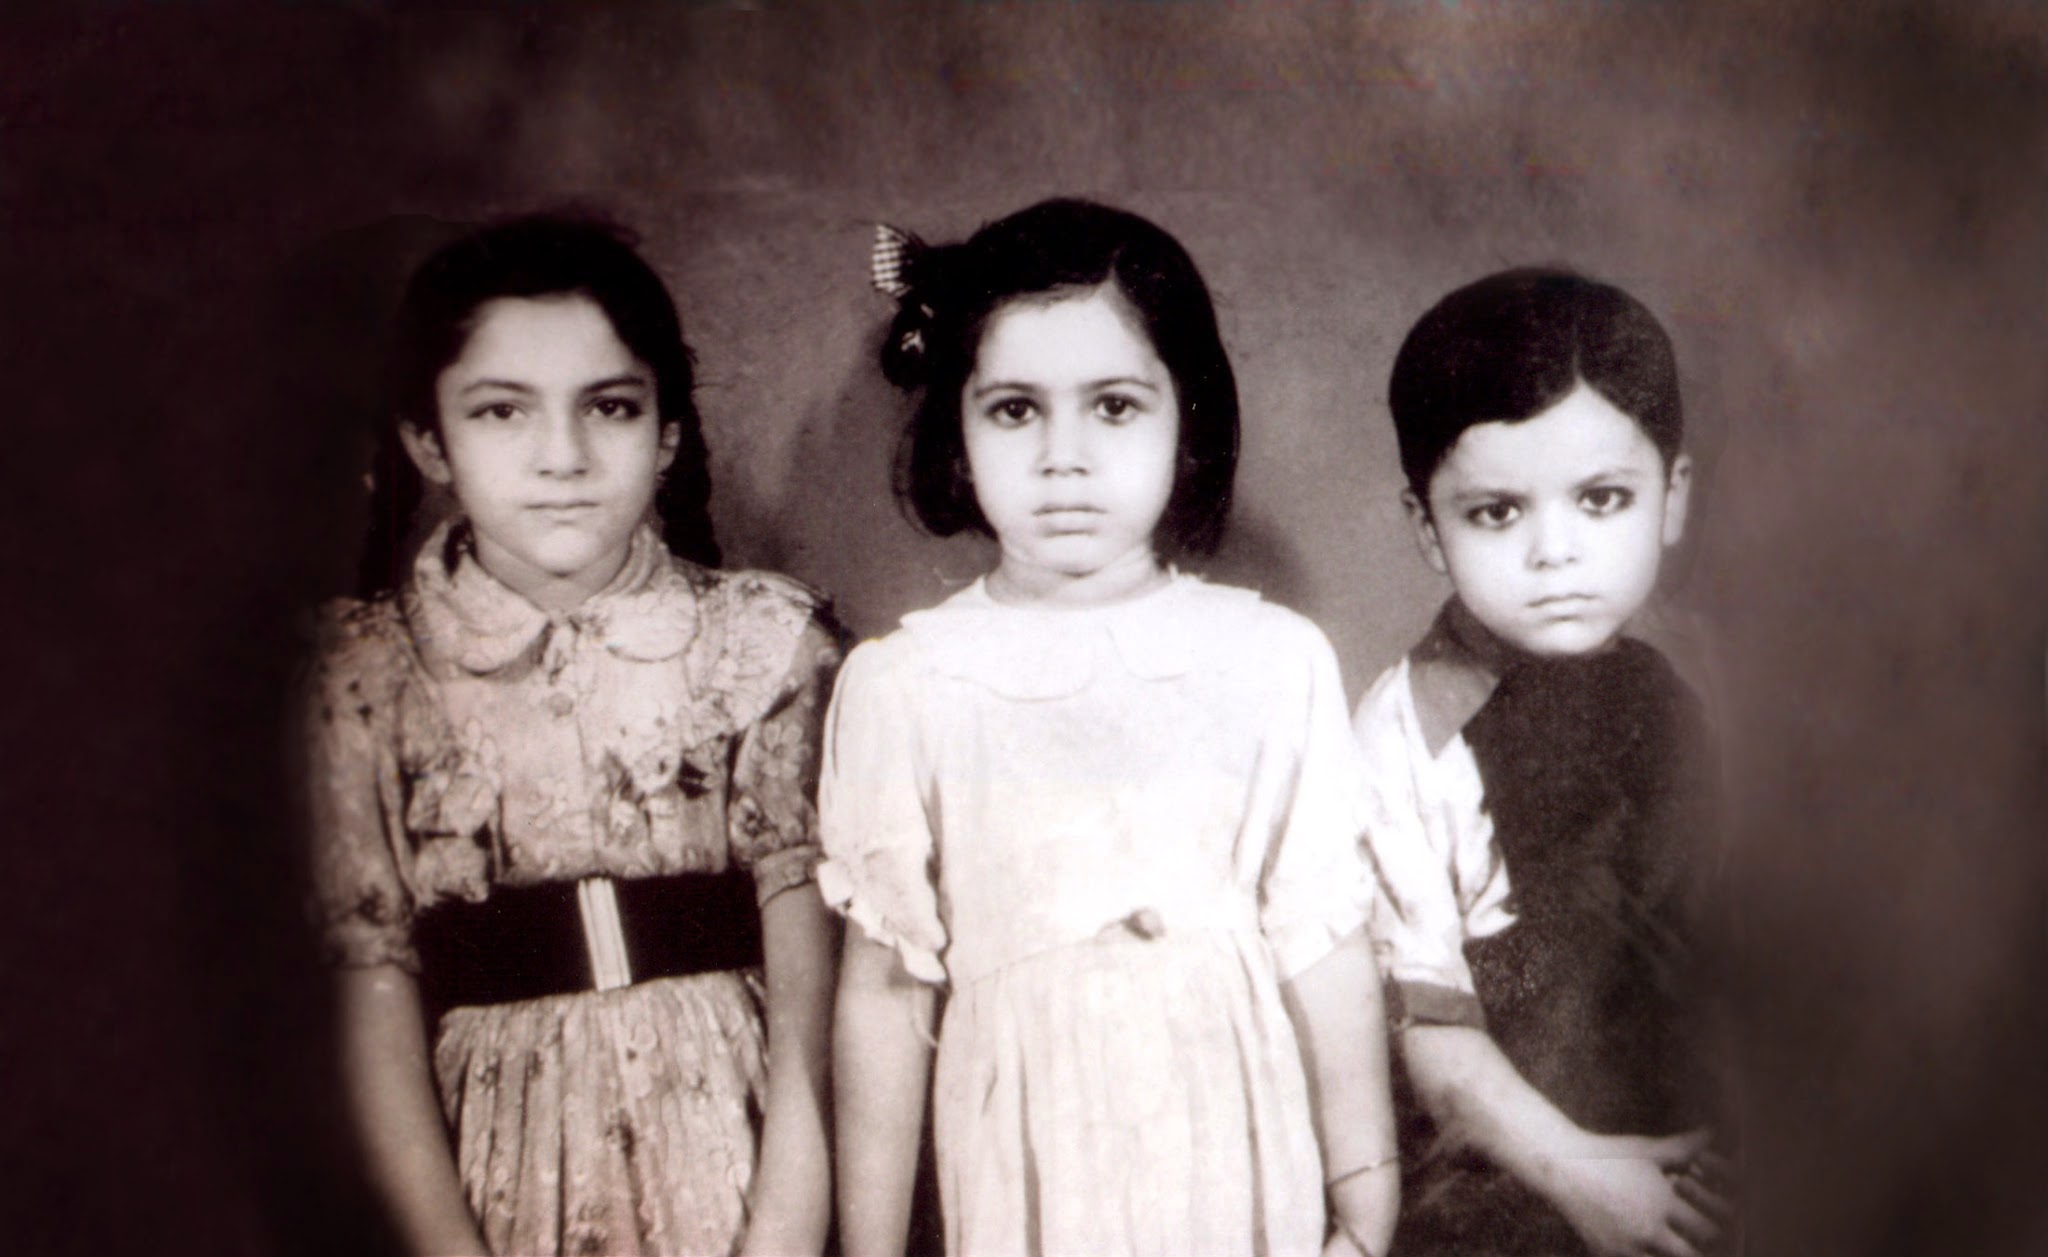 Arun Jaitley (Right) Childhood Photo with Sisters | Indian Politician Arun Jaitley (BJP) Rare Photos | Real-Life Photos